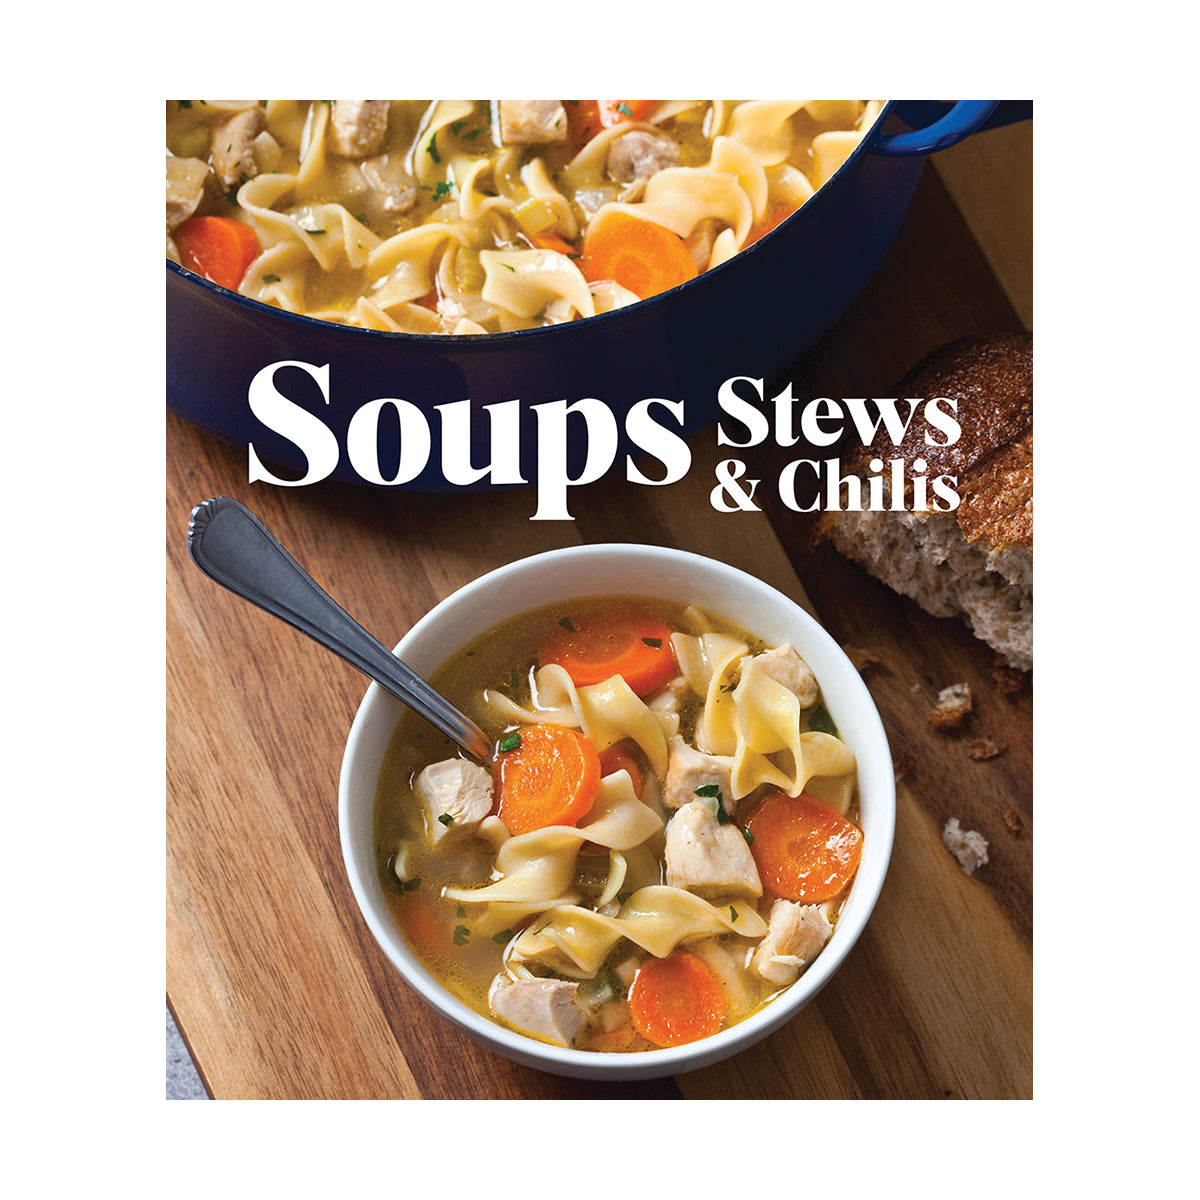 Soups Stews & Chilis